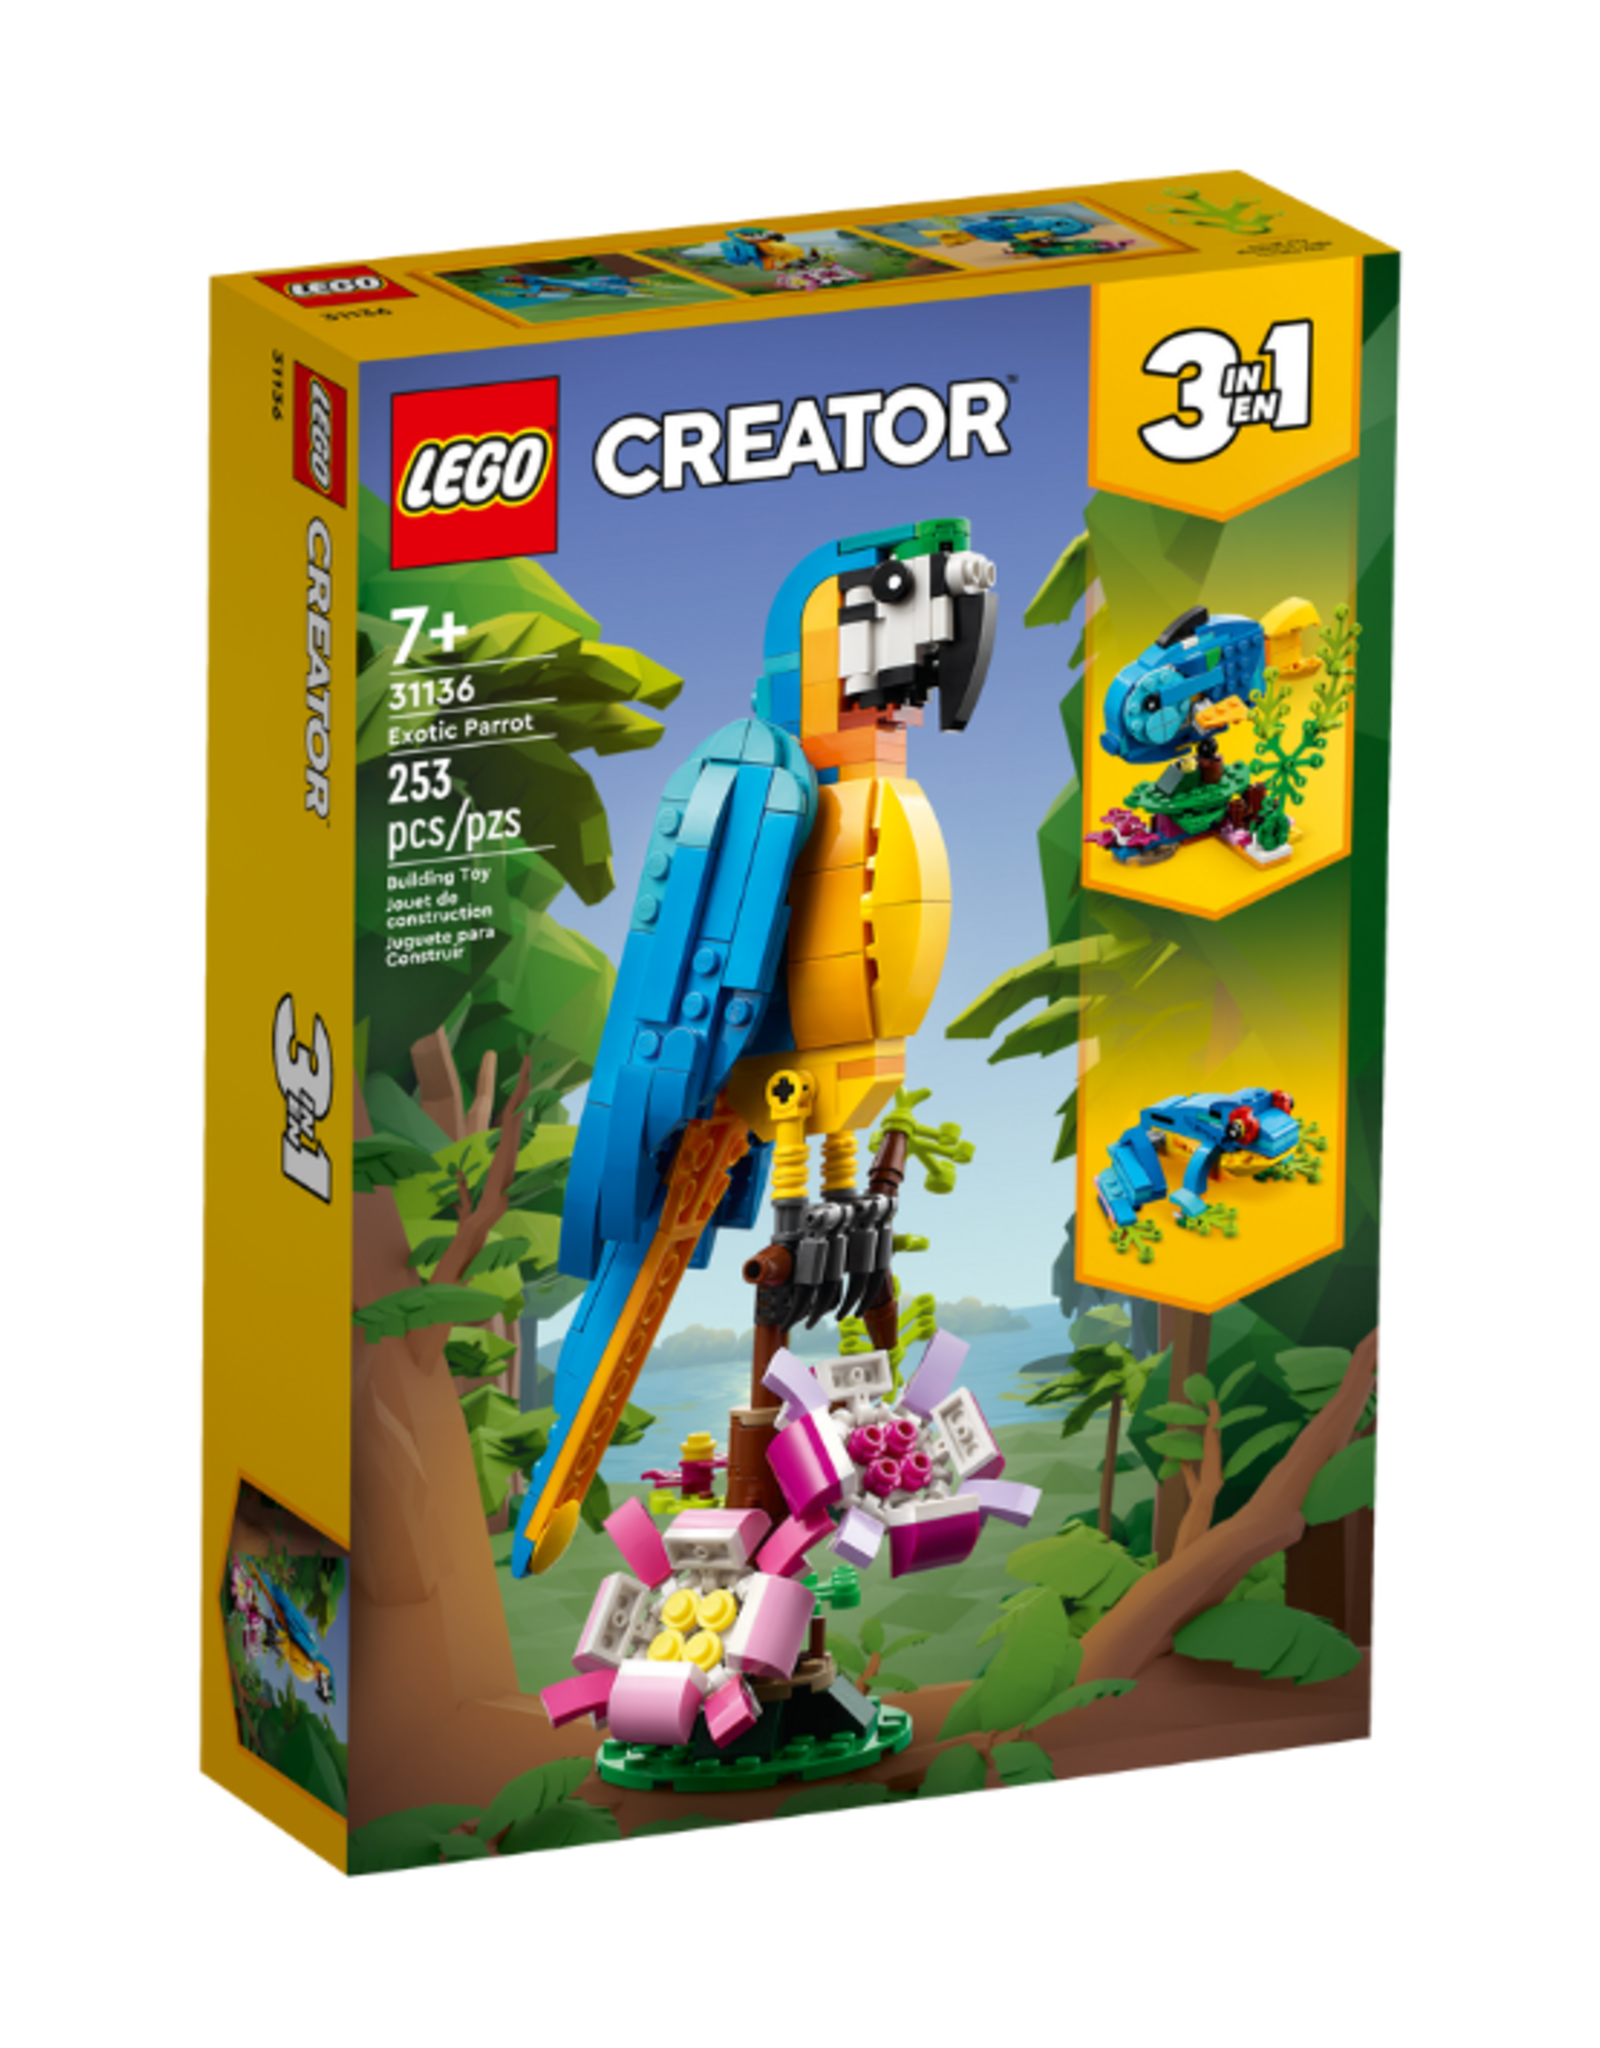 Lego Lego - Creator - 31136 - Exotic Parrot